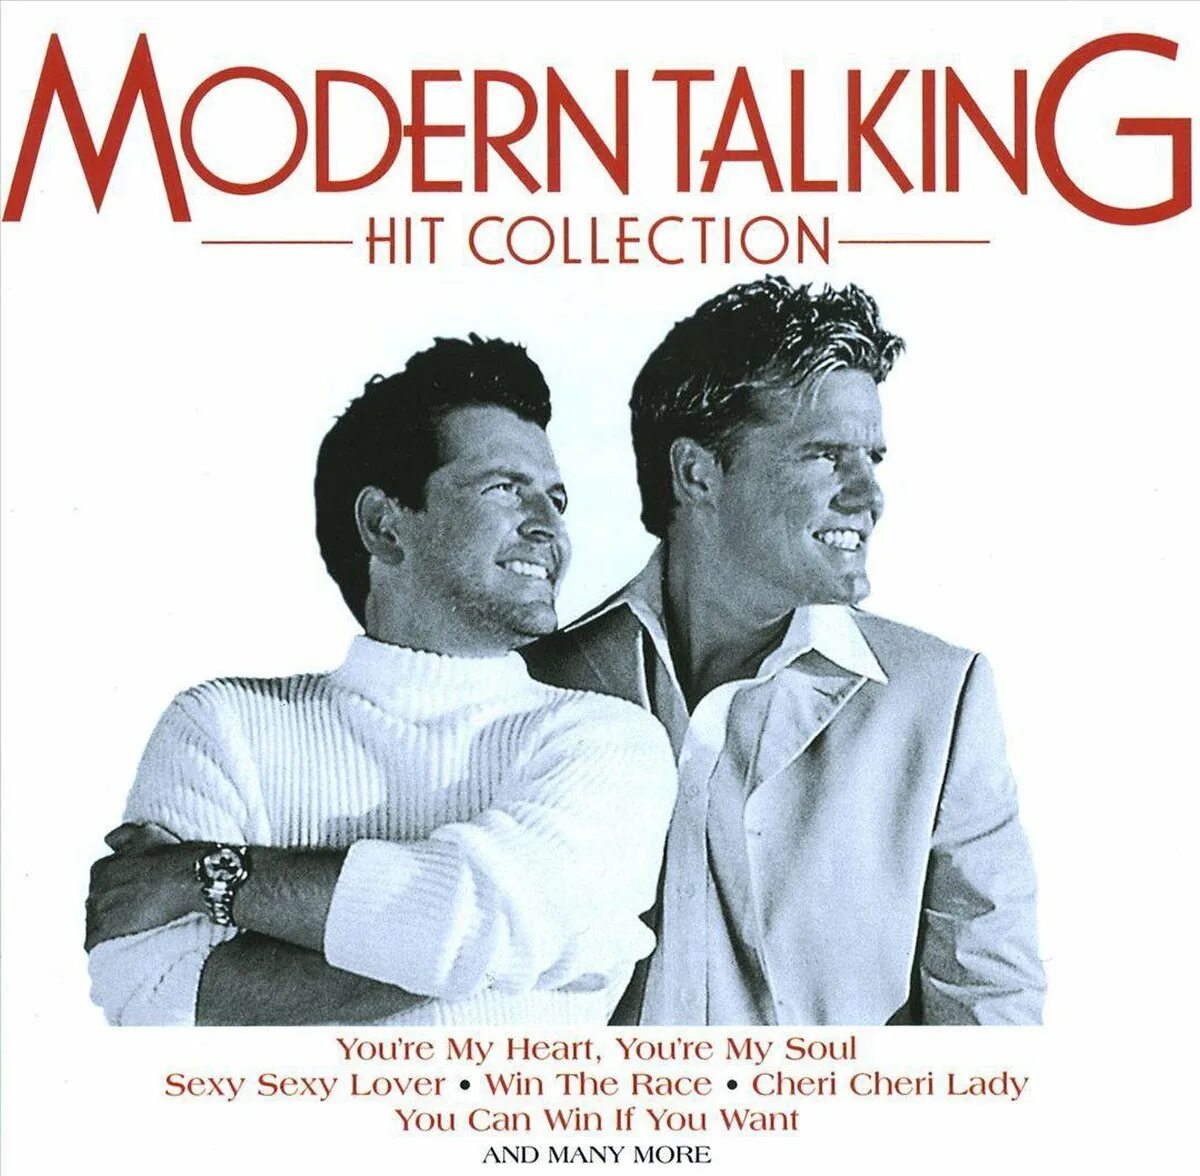 Группа Modern talking. Modern talking America обложка. Modern talking обложки альбомов. Modern talking Hits collection.